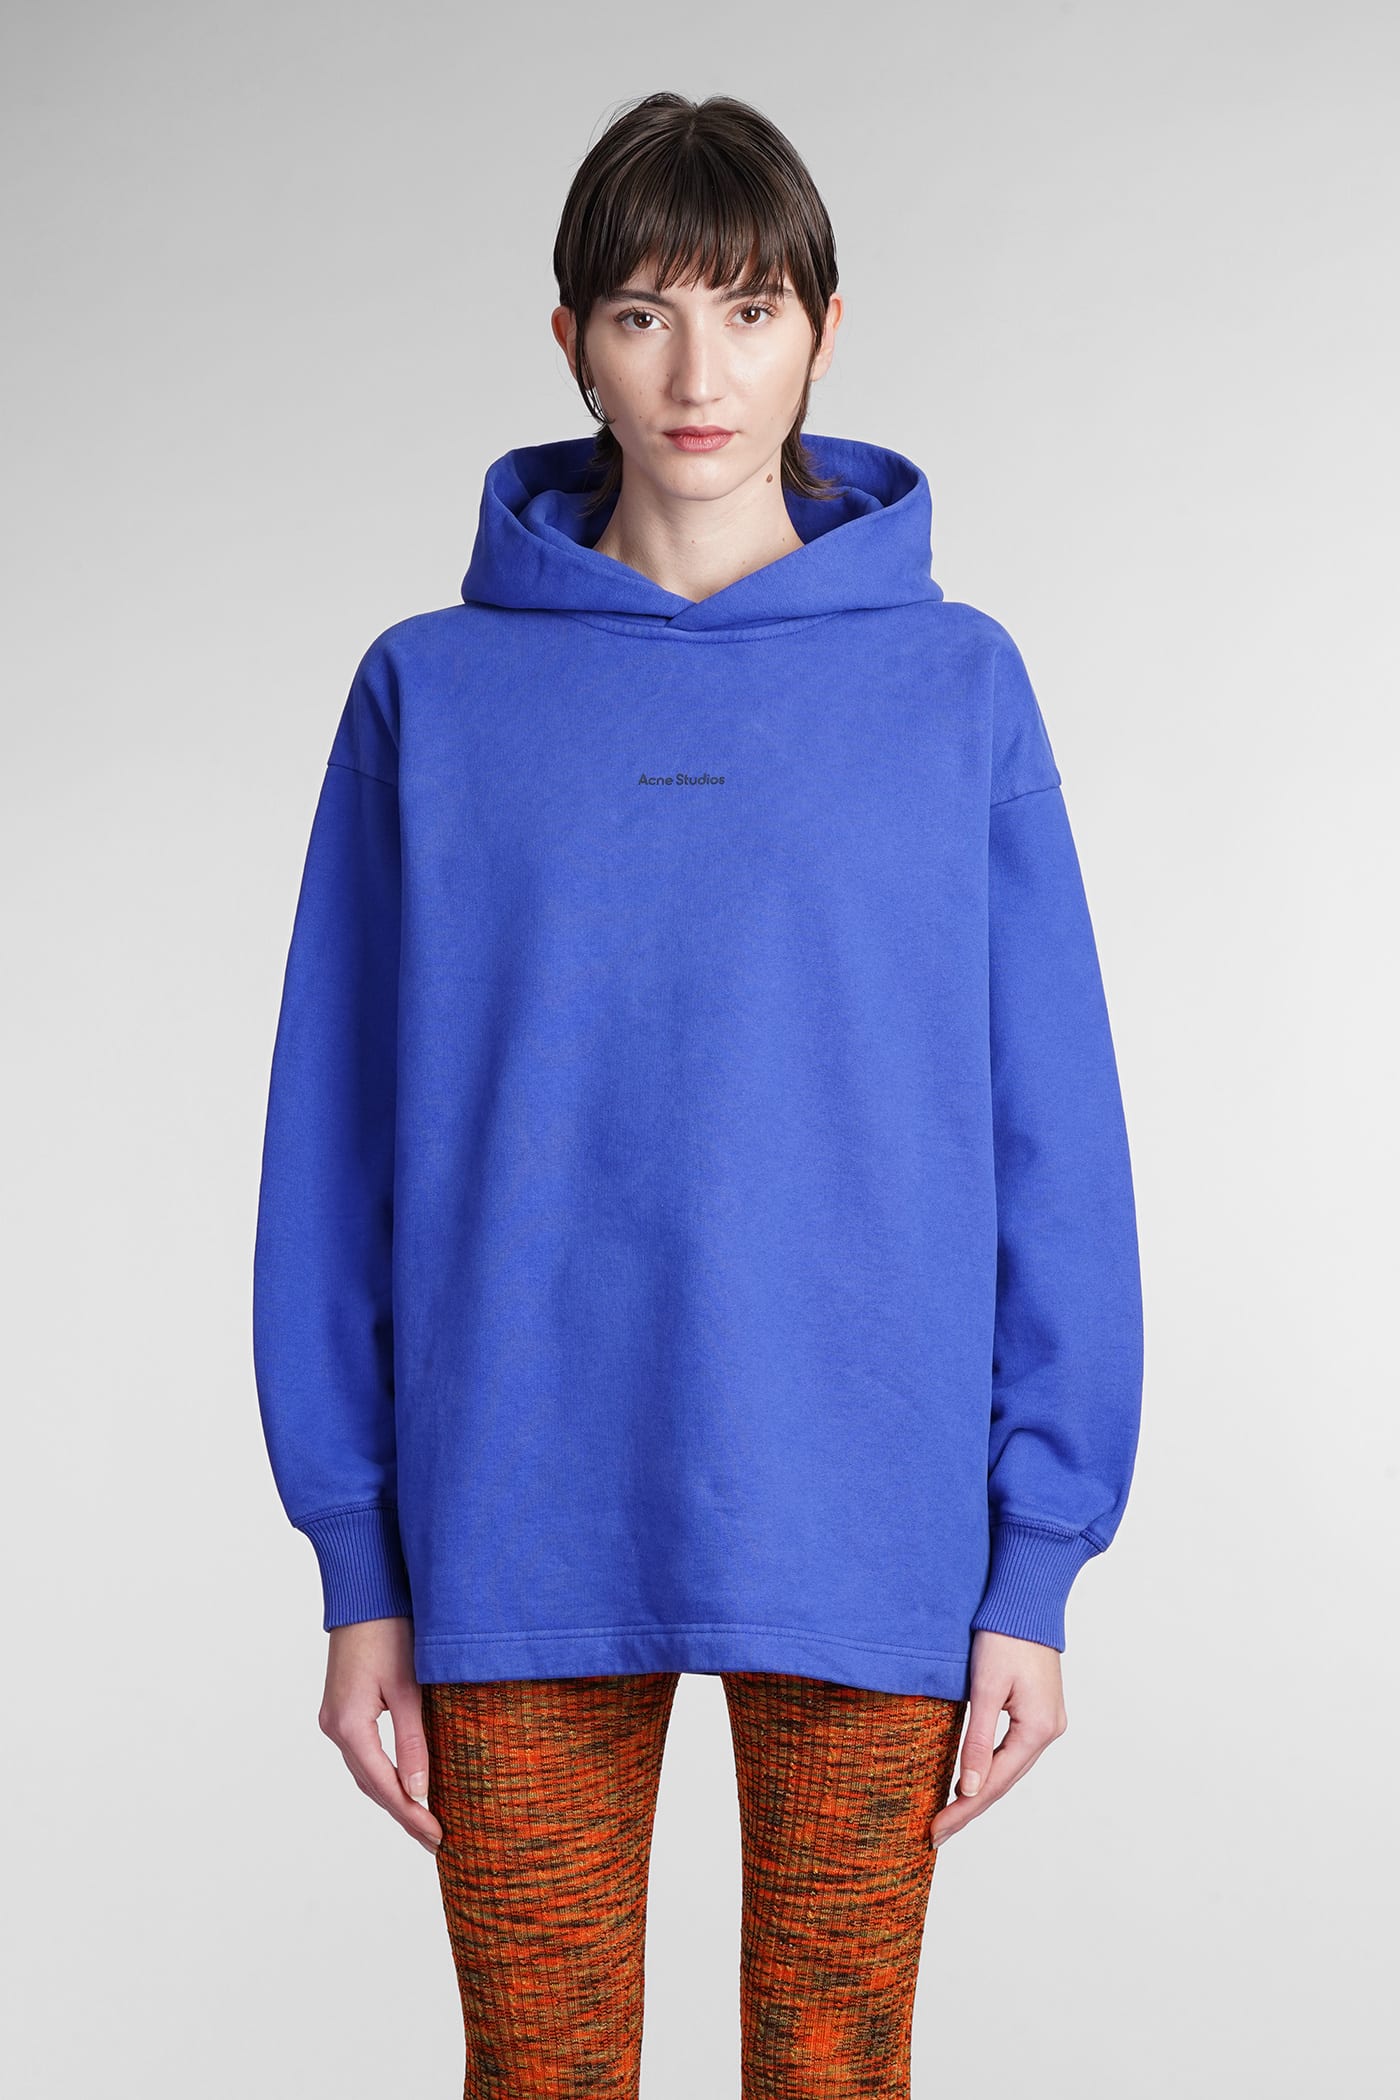 Acne Studios Sweatshirt In Blue Cotton